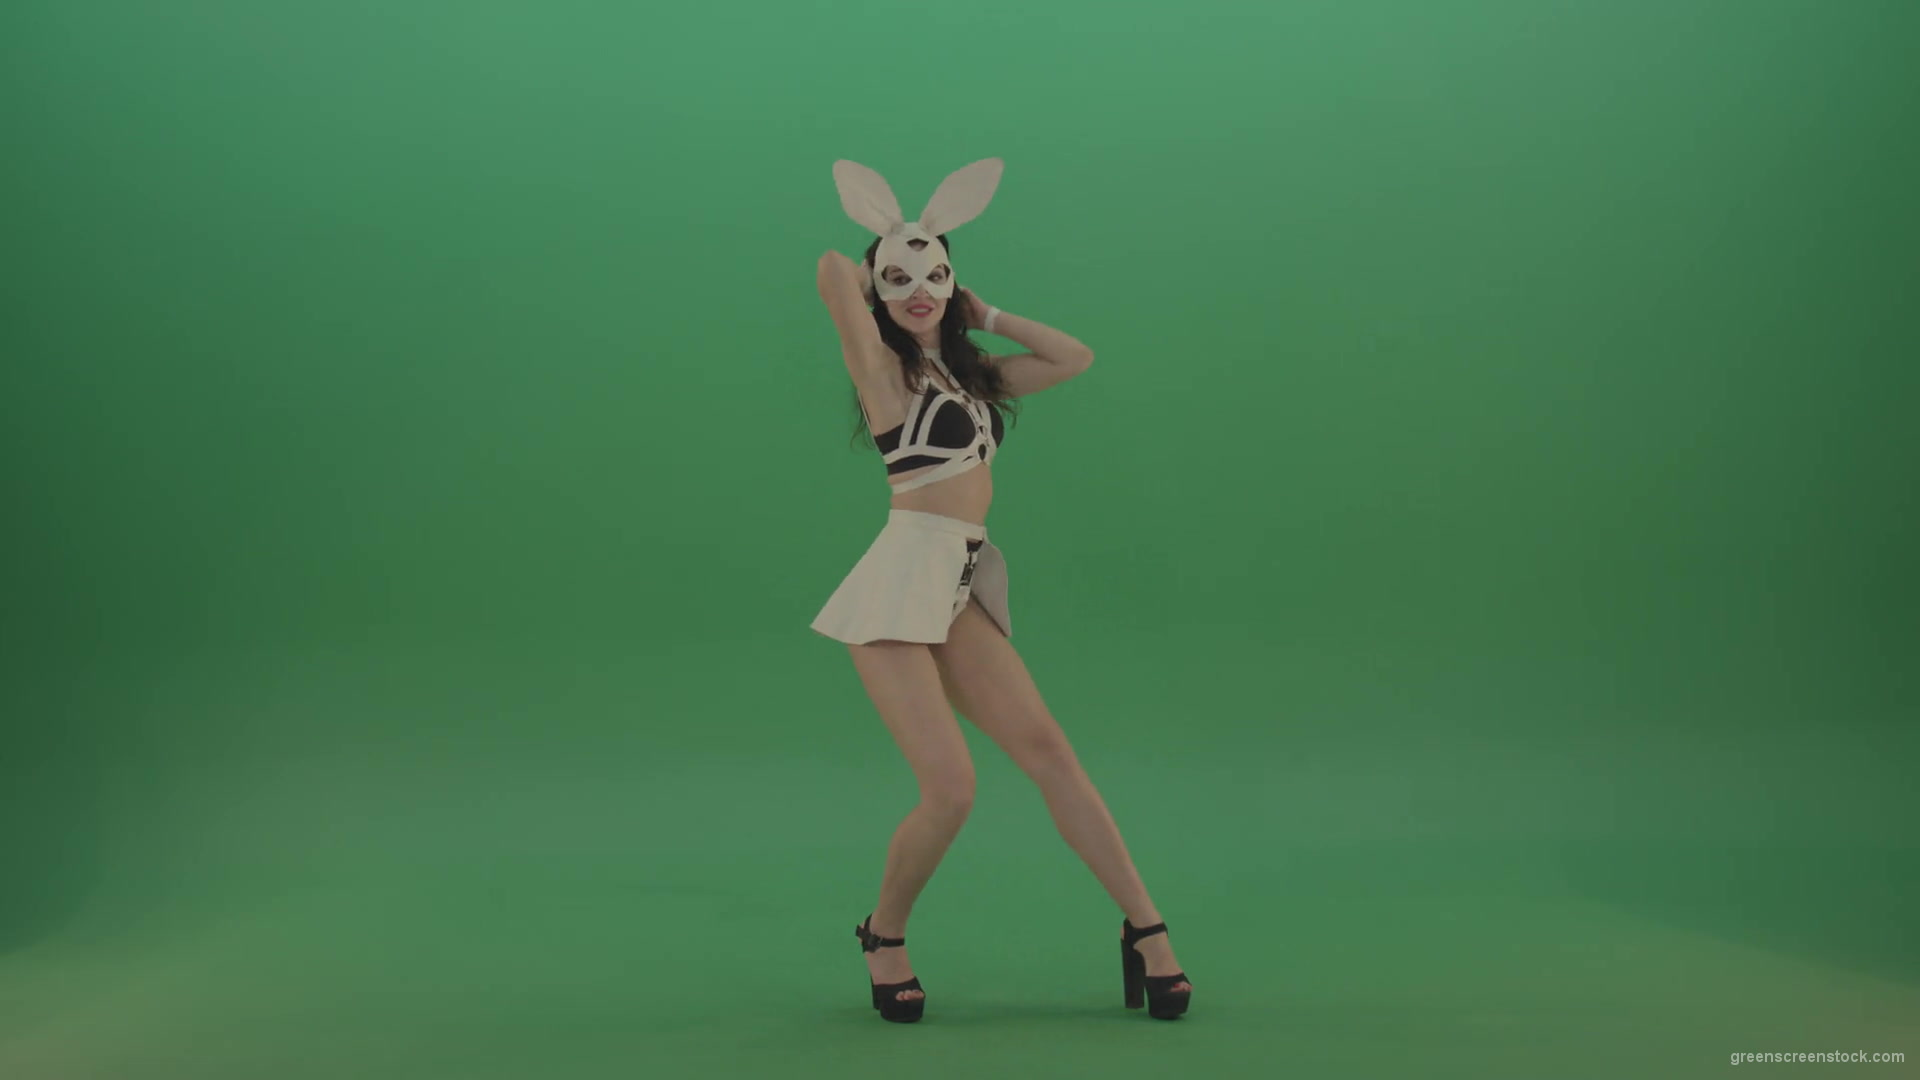 Sexy-posing-Bunny-Girl-dancing-Go-Go-Rabbit-Dance-over-Green-Screen-1920_008 Green Screen Stock